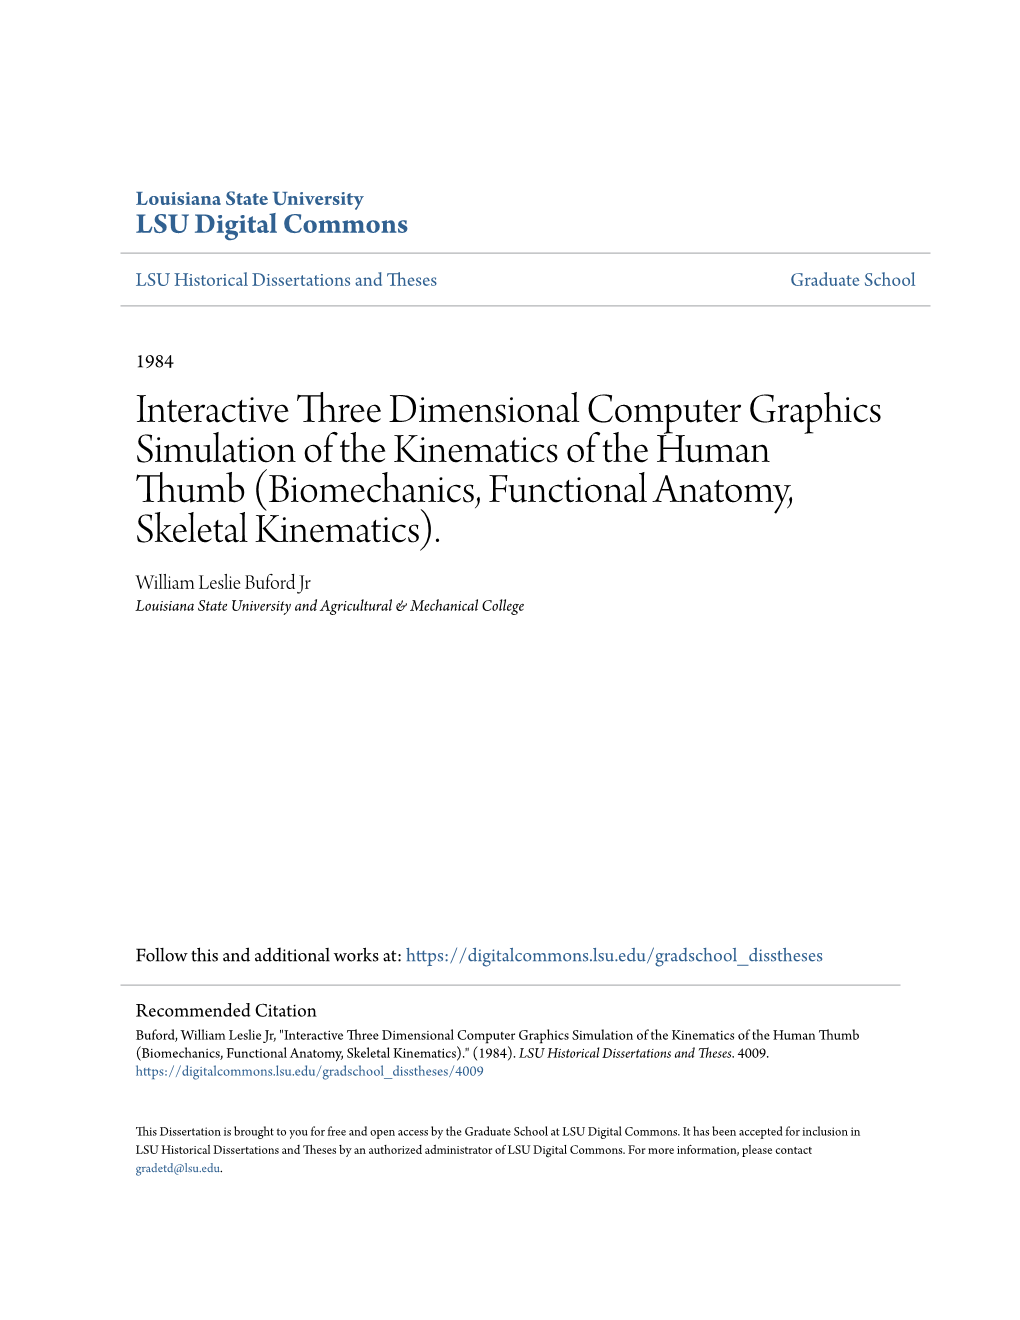 Interactive Three Dimensional Computer Graphics Simulation of the Kinematics of the Human Thumb (Biomechanics, Functional Anatomy, Skeletal Kinematics)